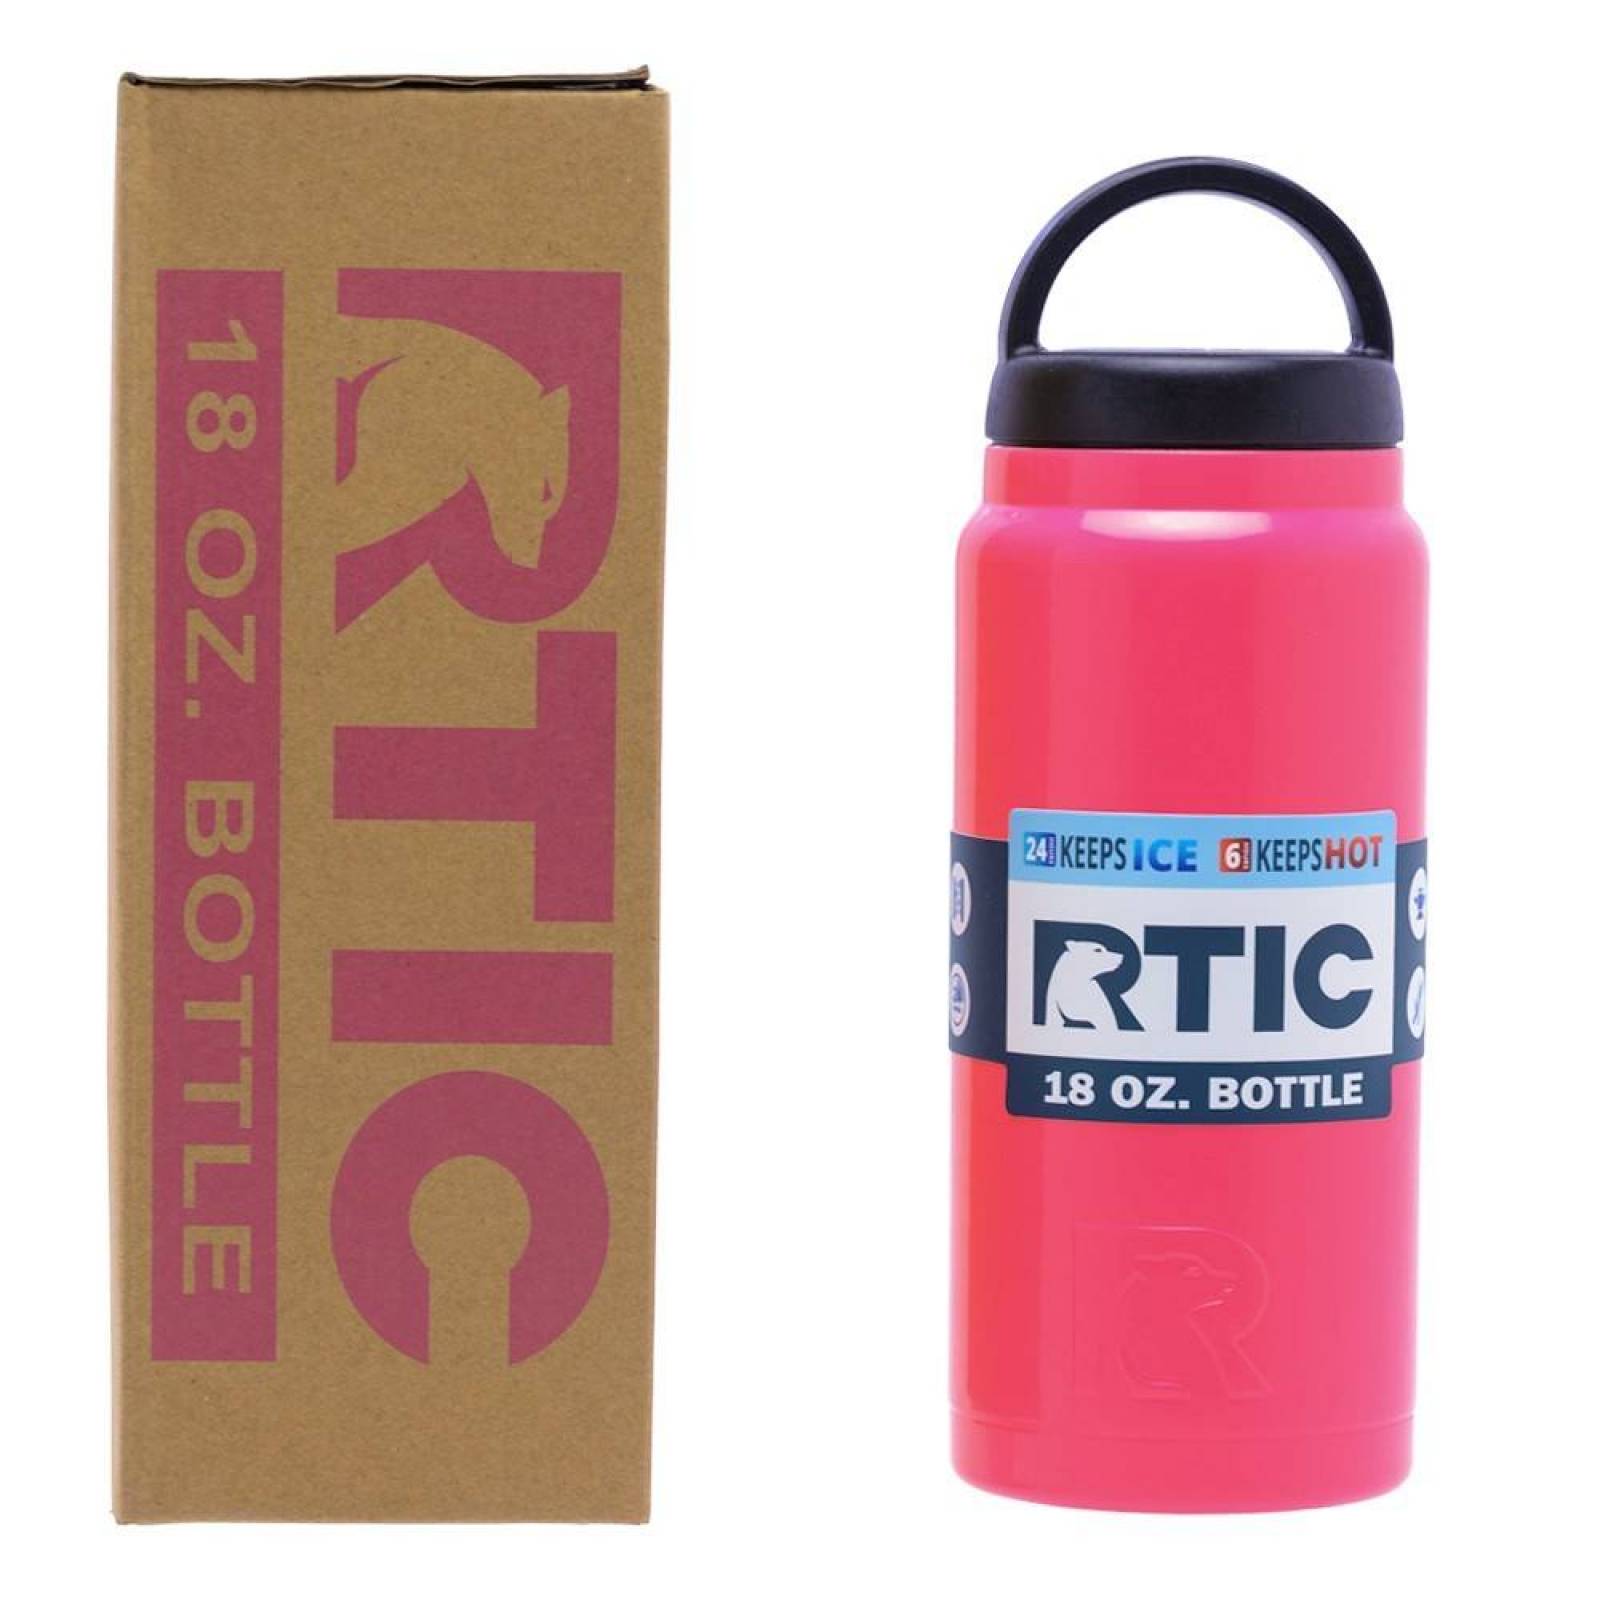 RTIC Bottle 18 oz. Pink   80